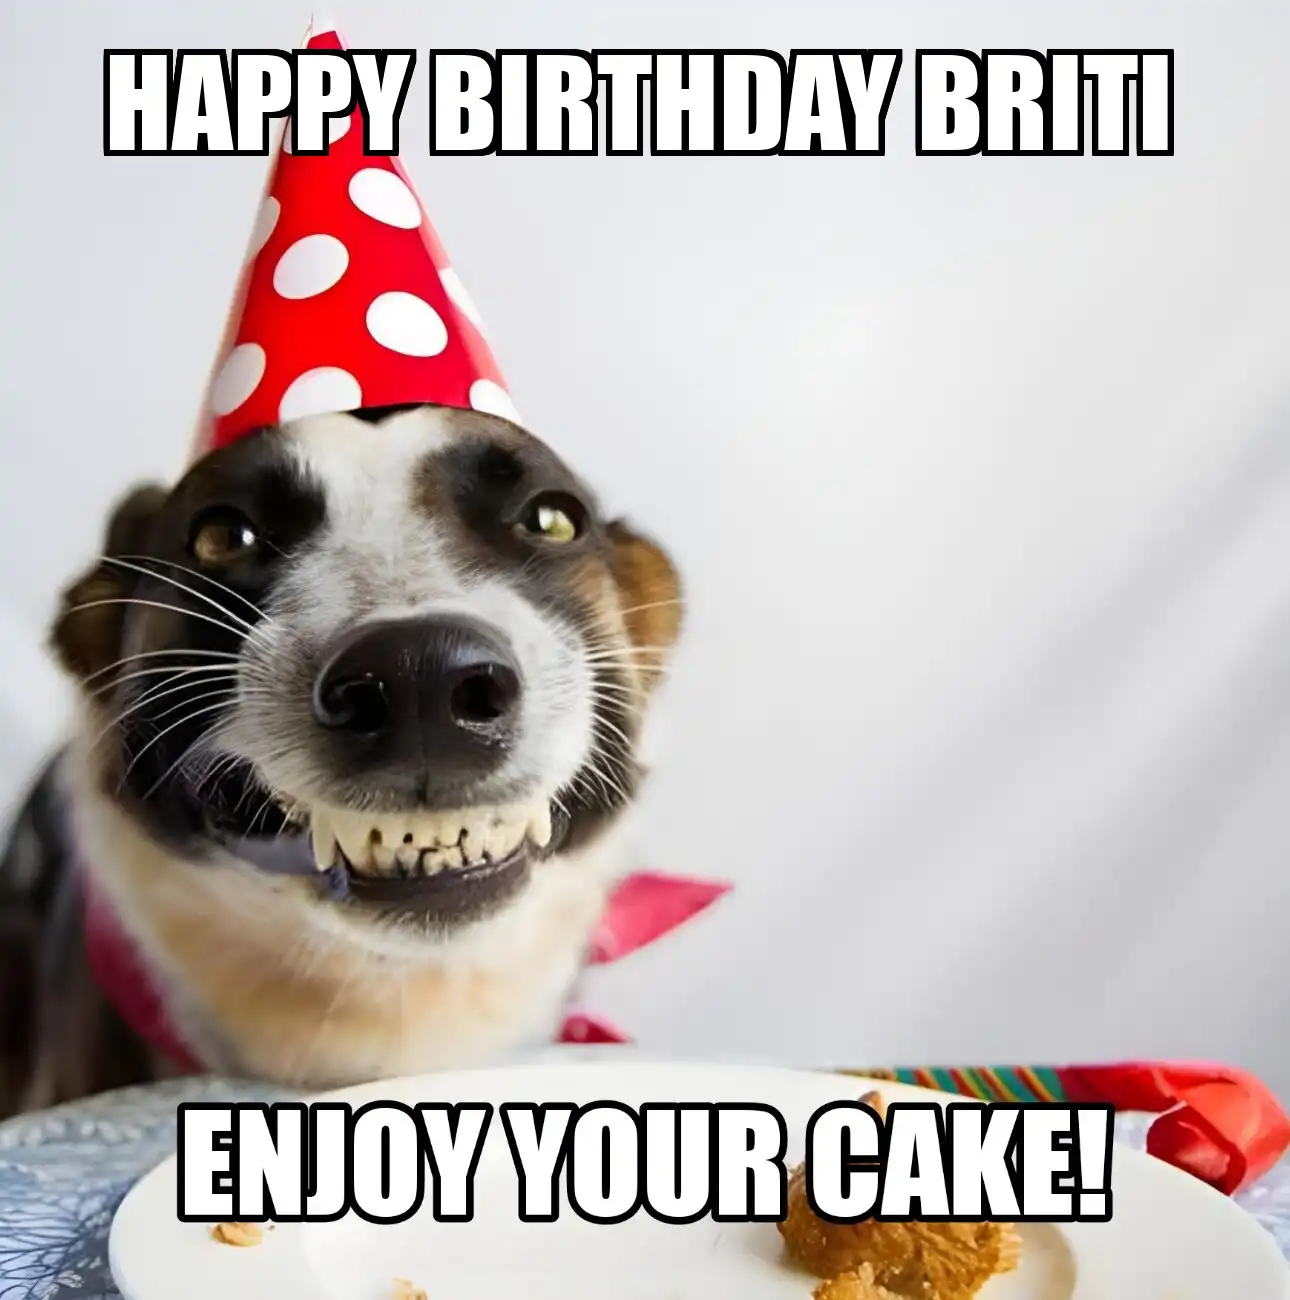 Happy Birthday Briti Enjoy Your Cake Dog Meme